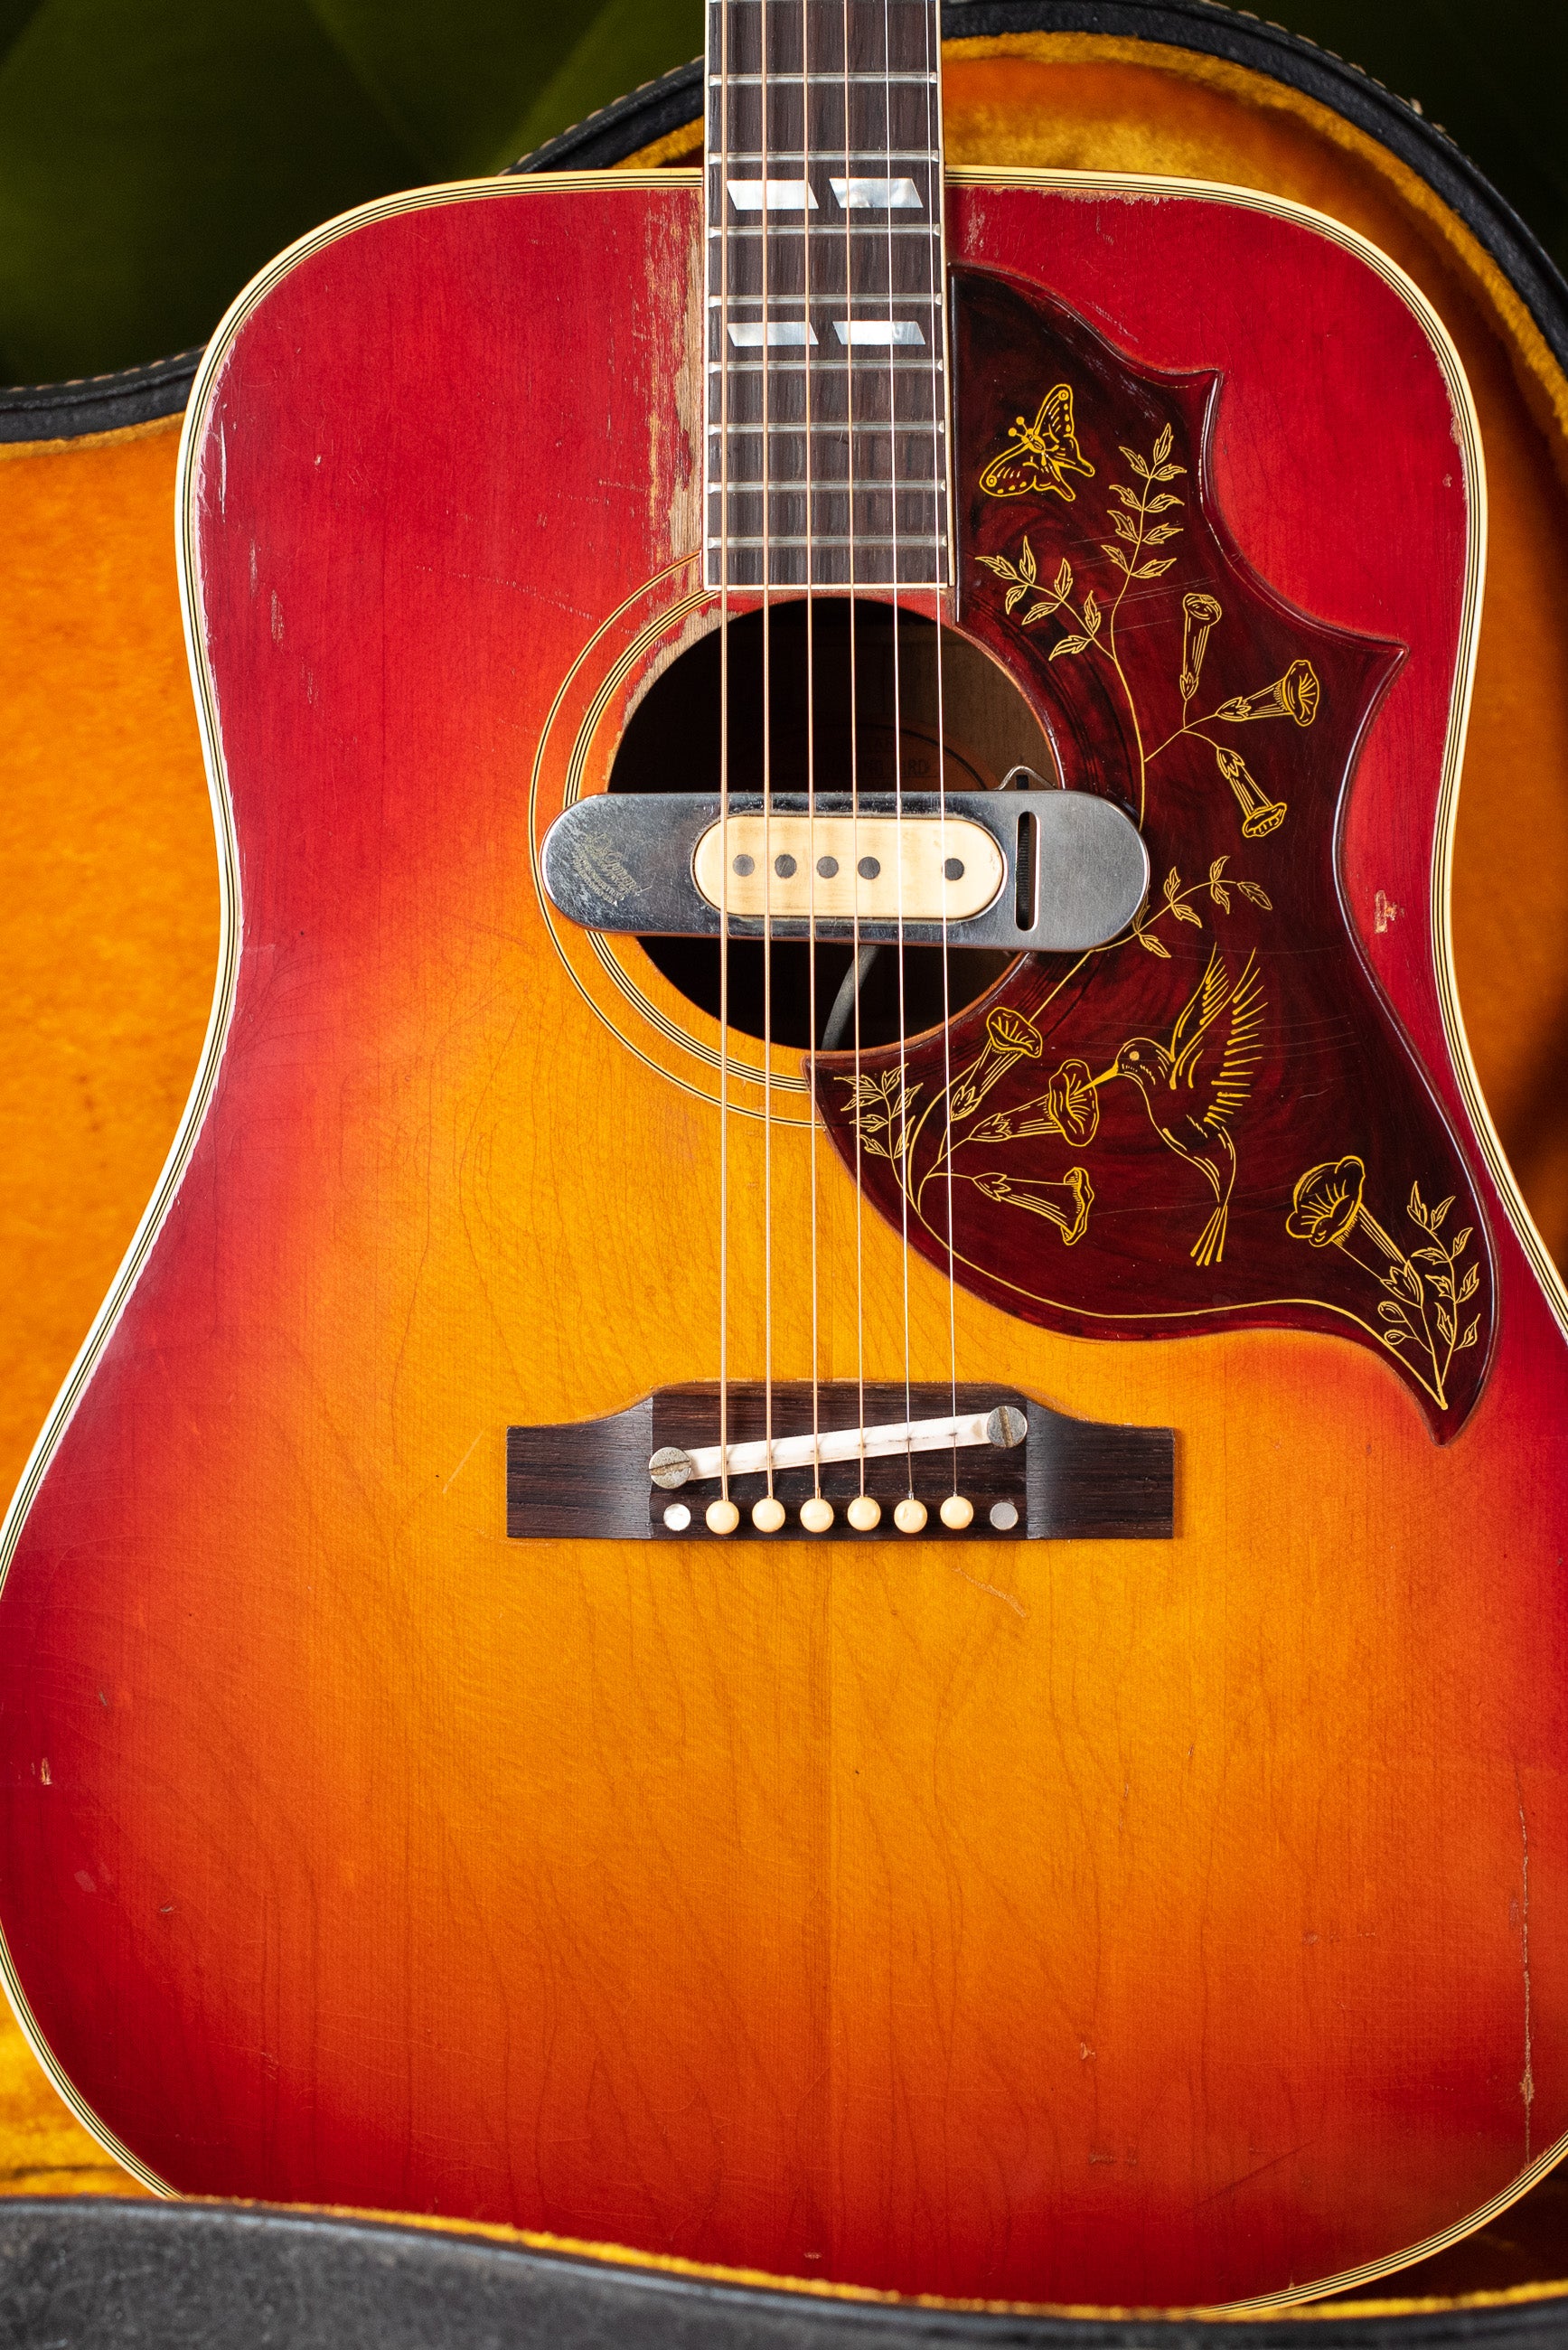 Vintage 1963 Gibson Hummingbird acoustic guitar